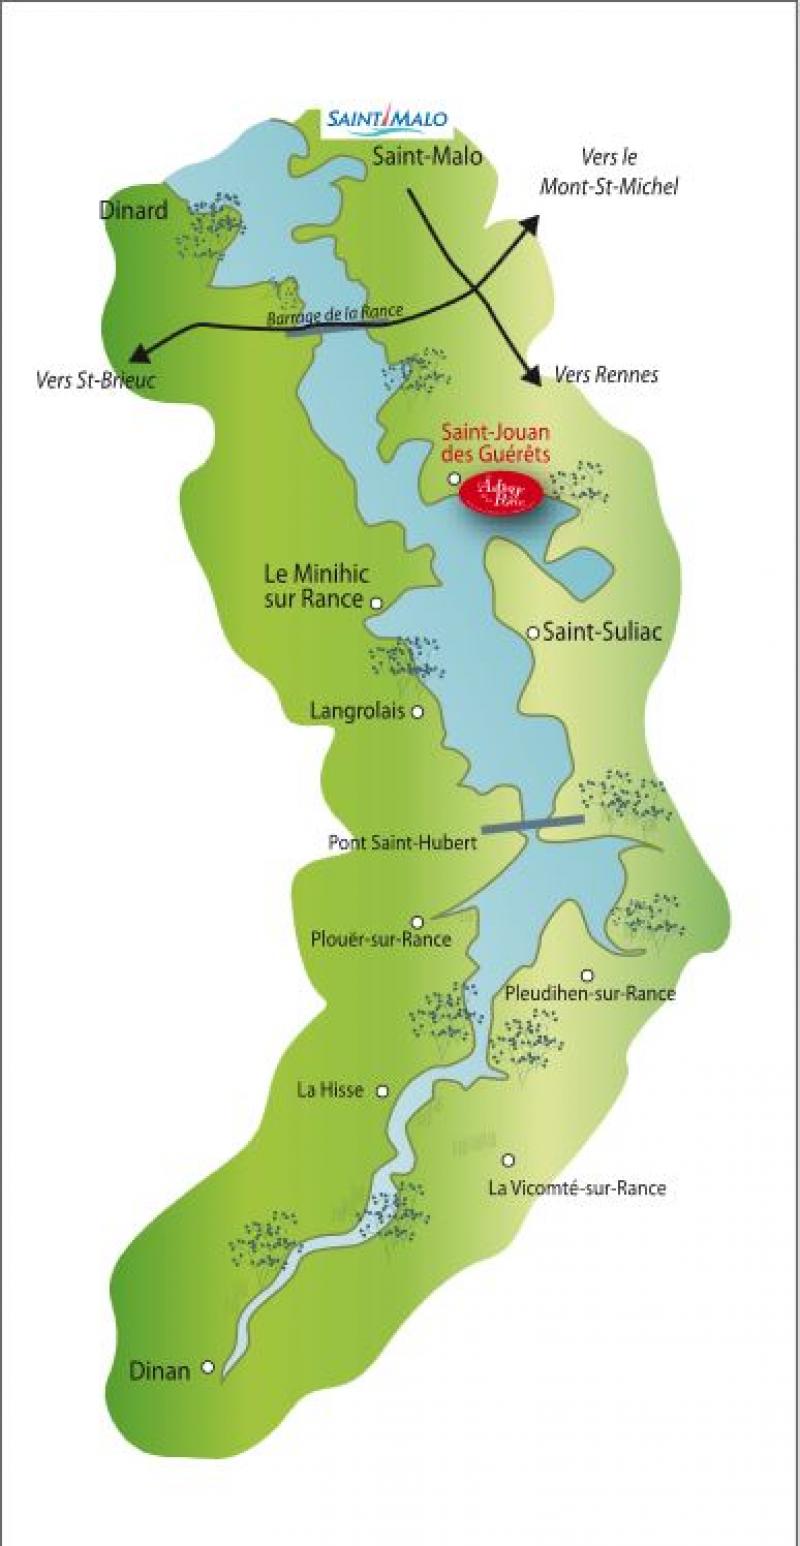 Auberge de la Porte - Map "La Rance"